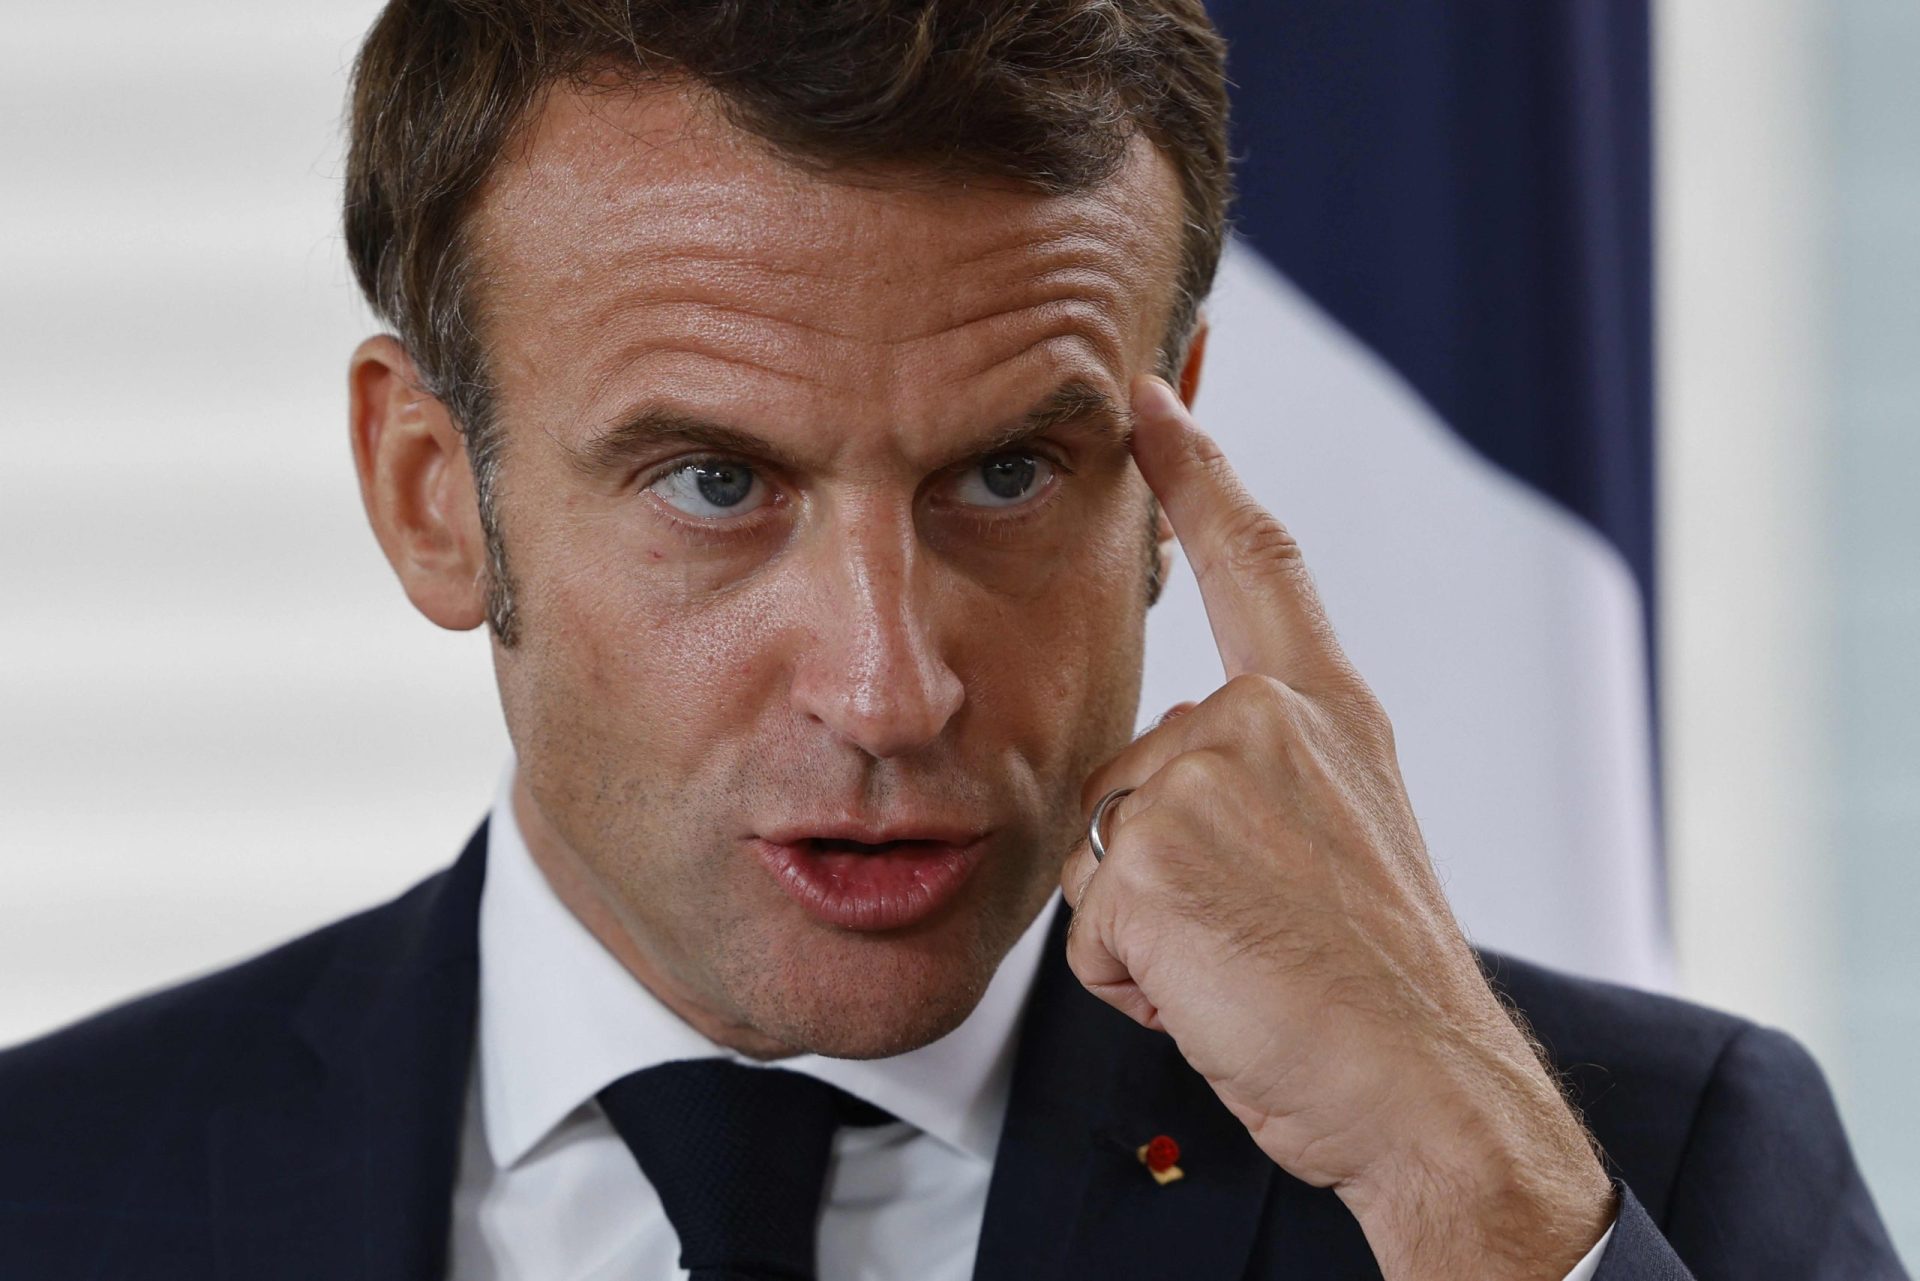 Macron enfrenta greve nas refinarias e escassez de combustível